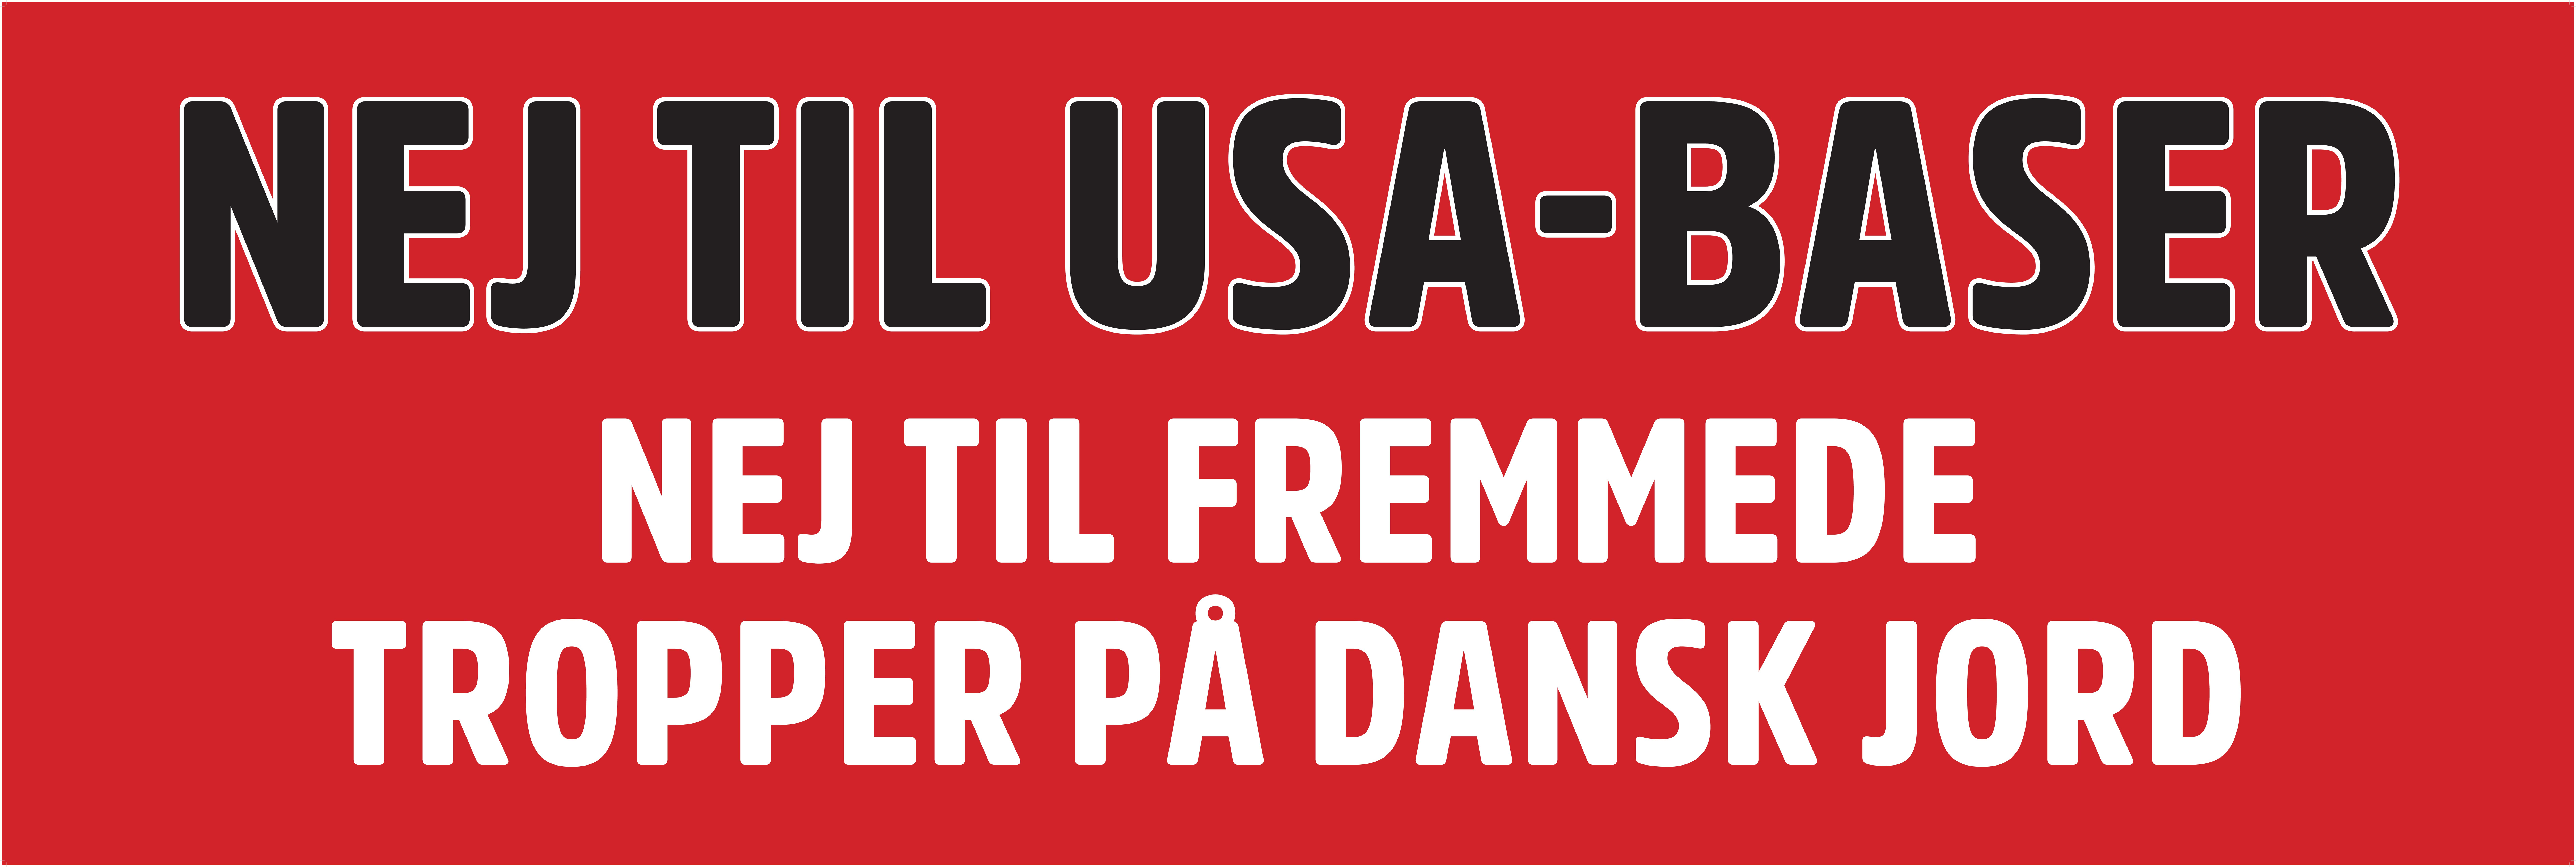 Kampagnen NEJ TIL USA-BASER - nej til fremmede tropper på dansk jord